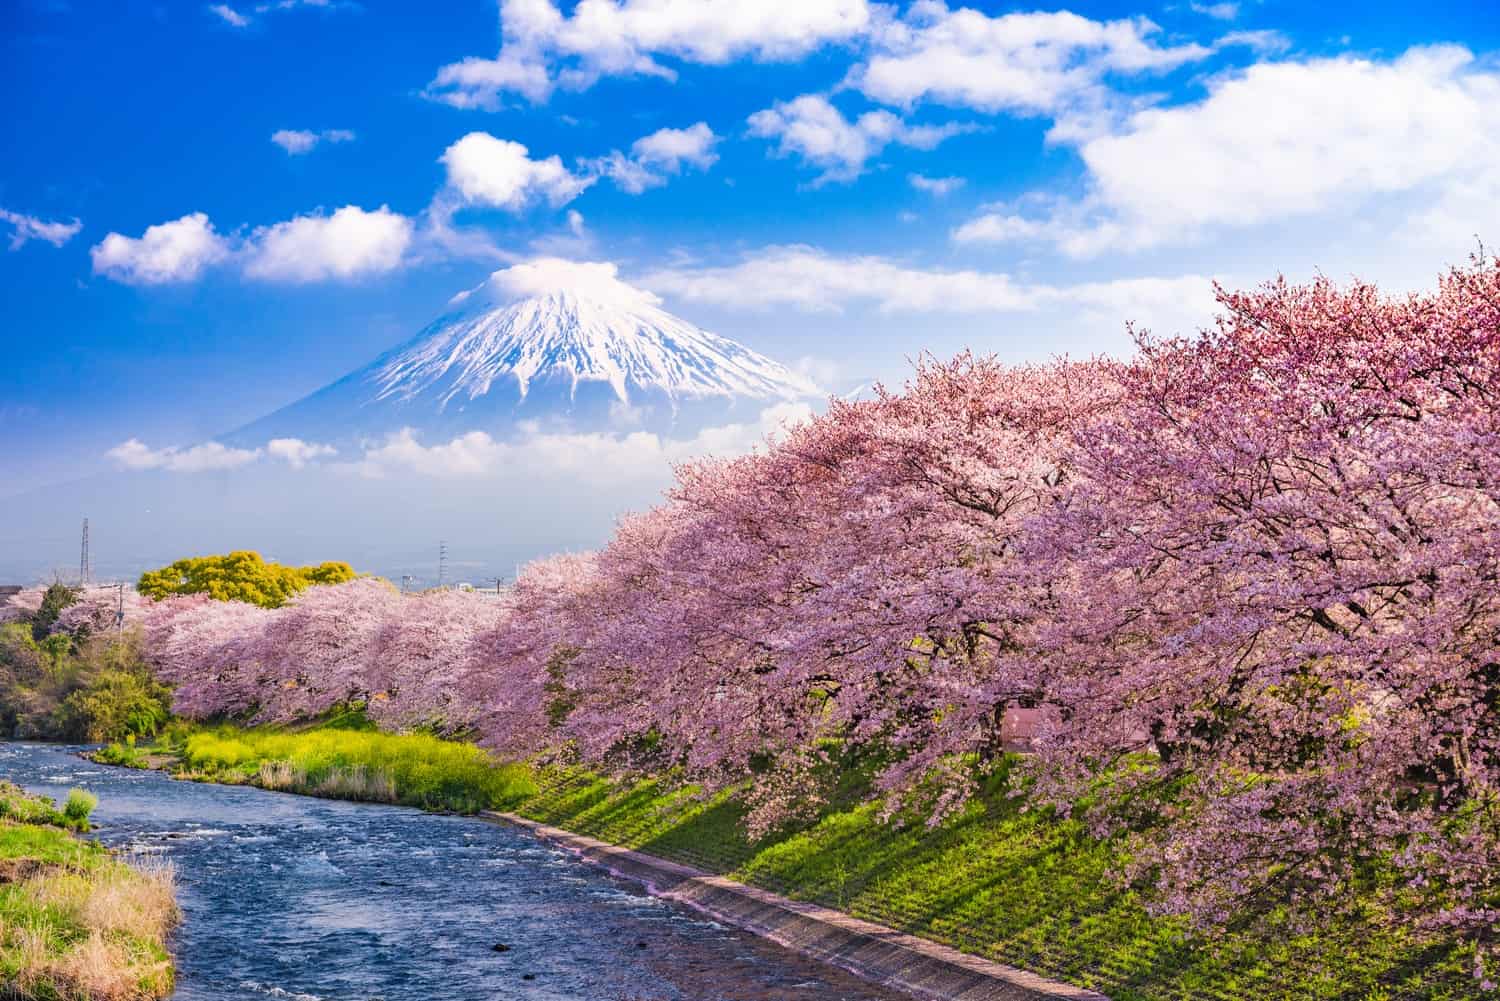 Mount Fuji in spring